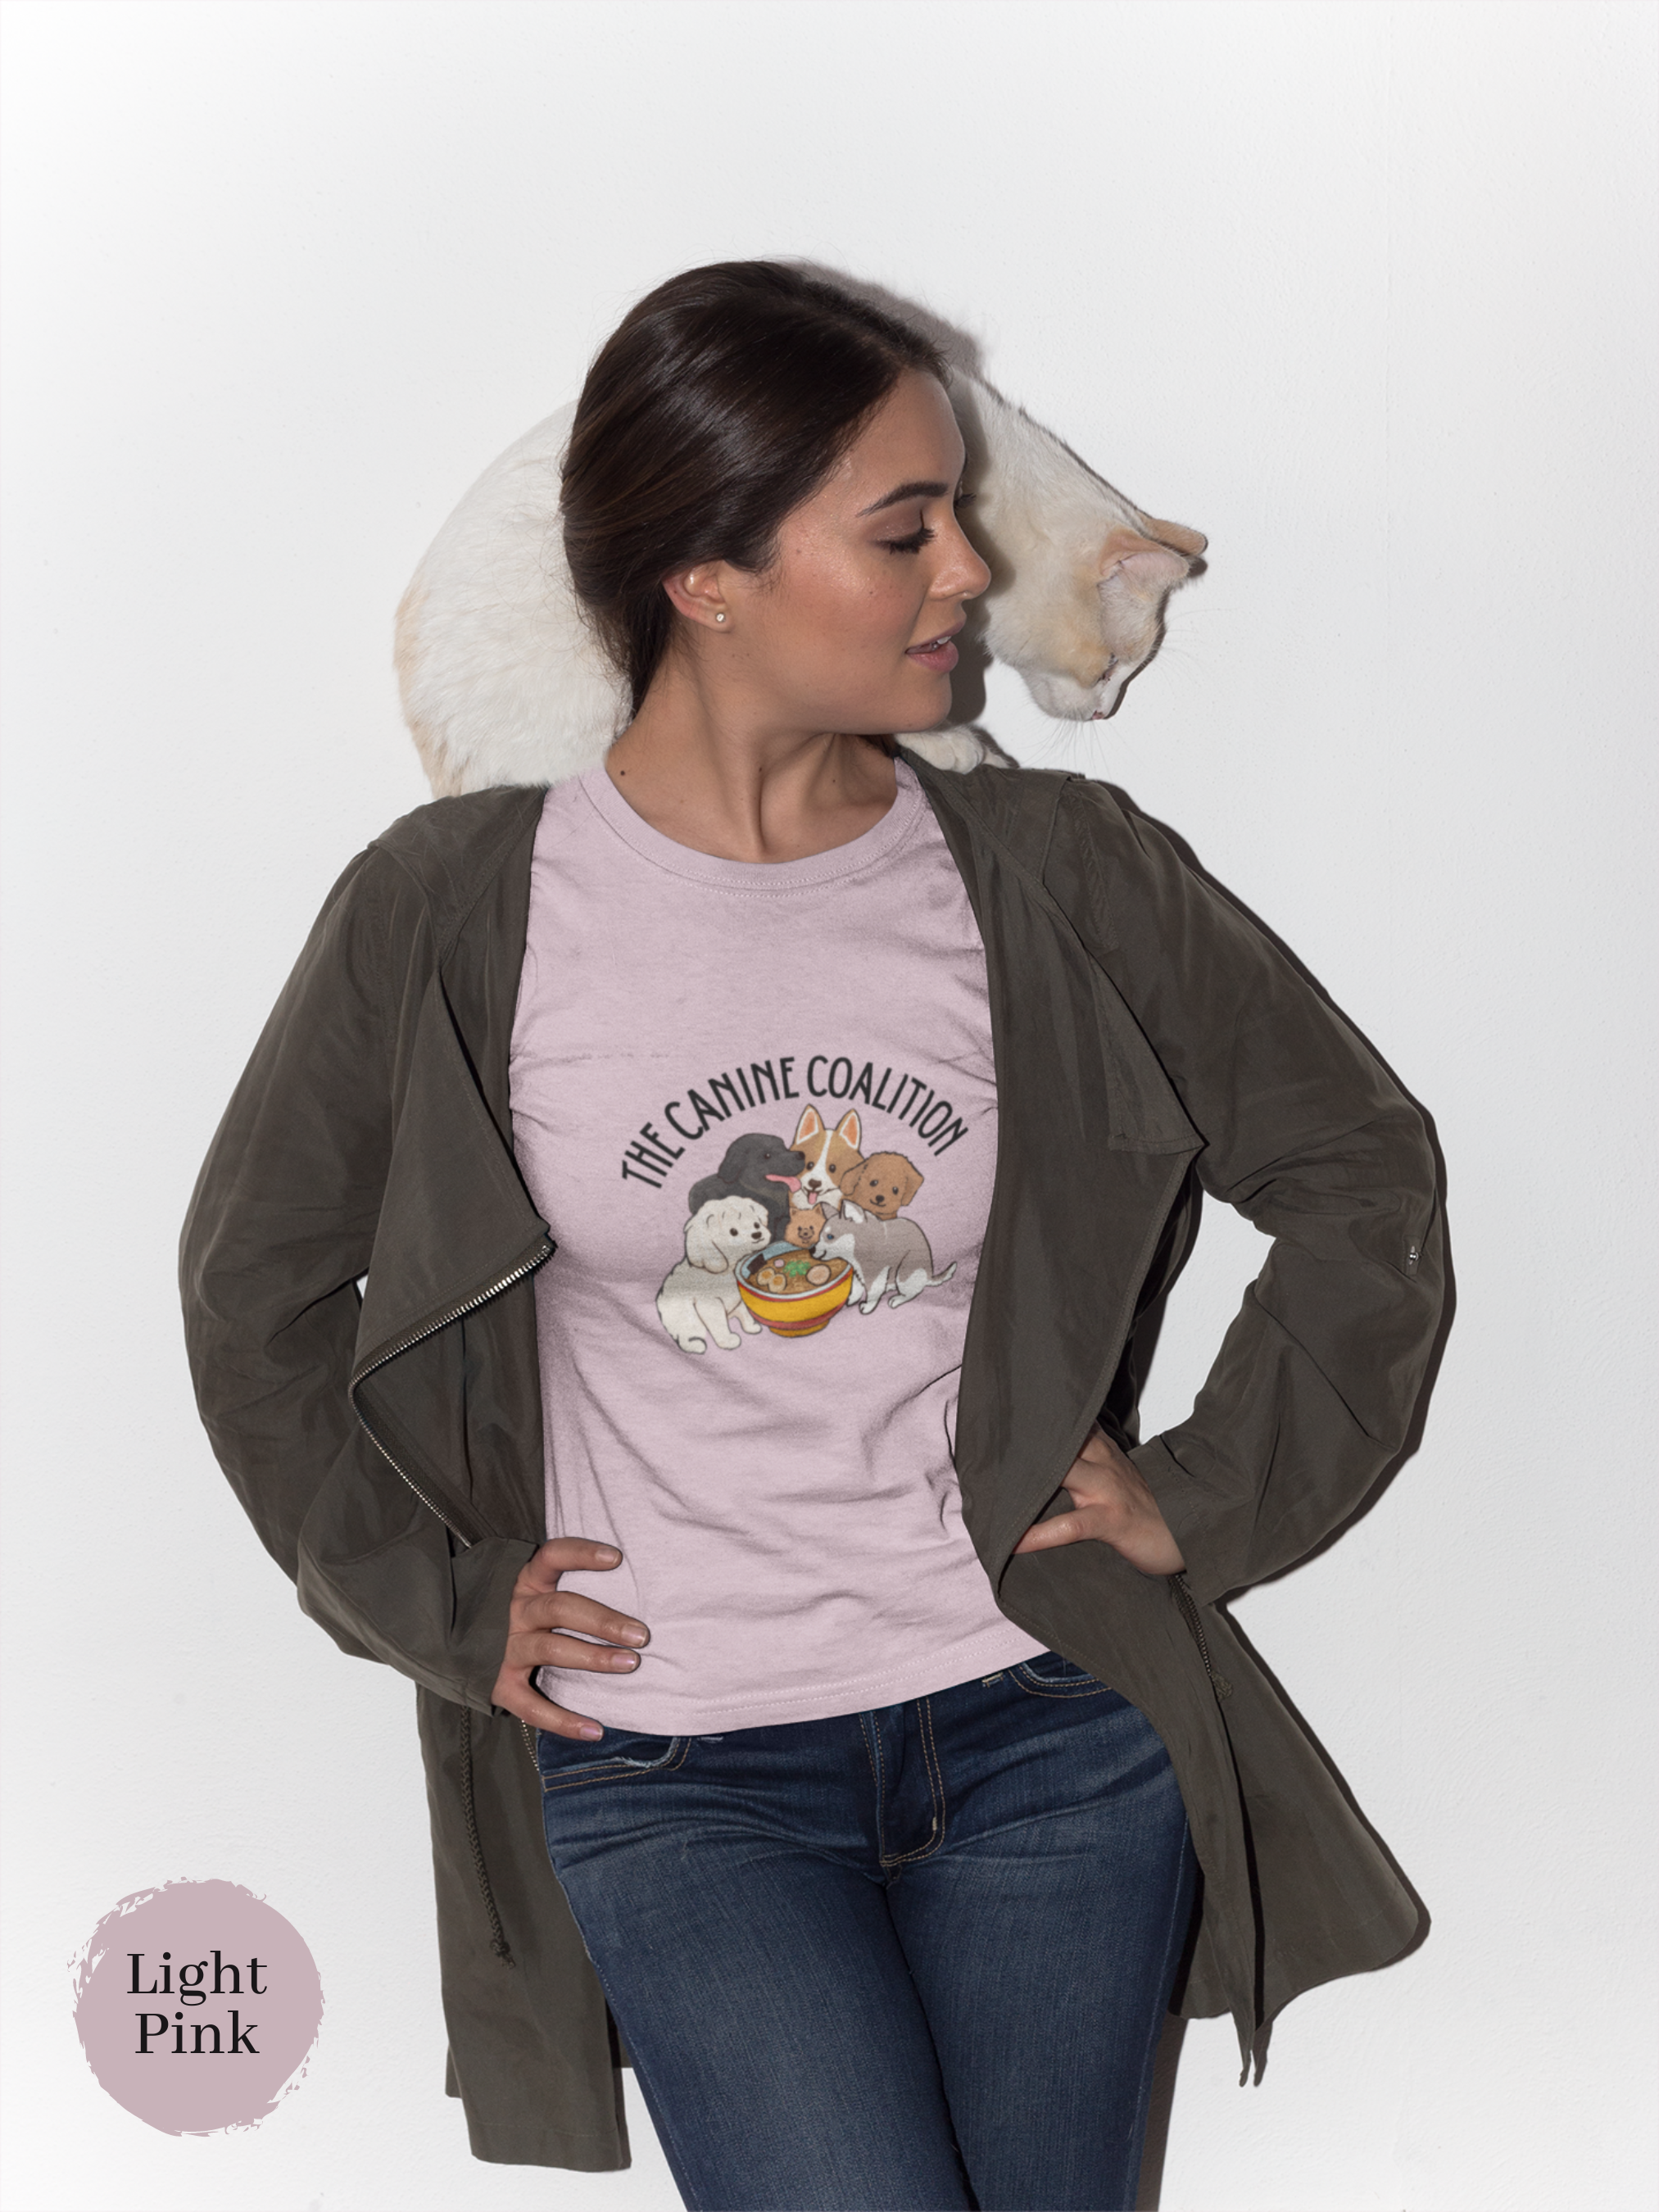 Ramen T-shirt: The Canine Coalition - Japanese Foodie Shirt with Ramen Art featuring 6 Cute Dogs